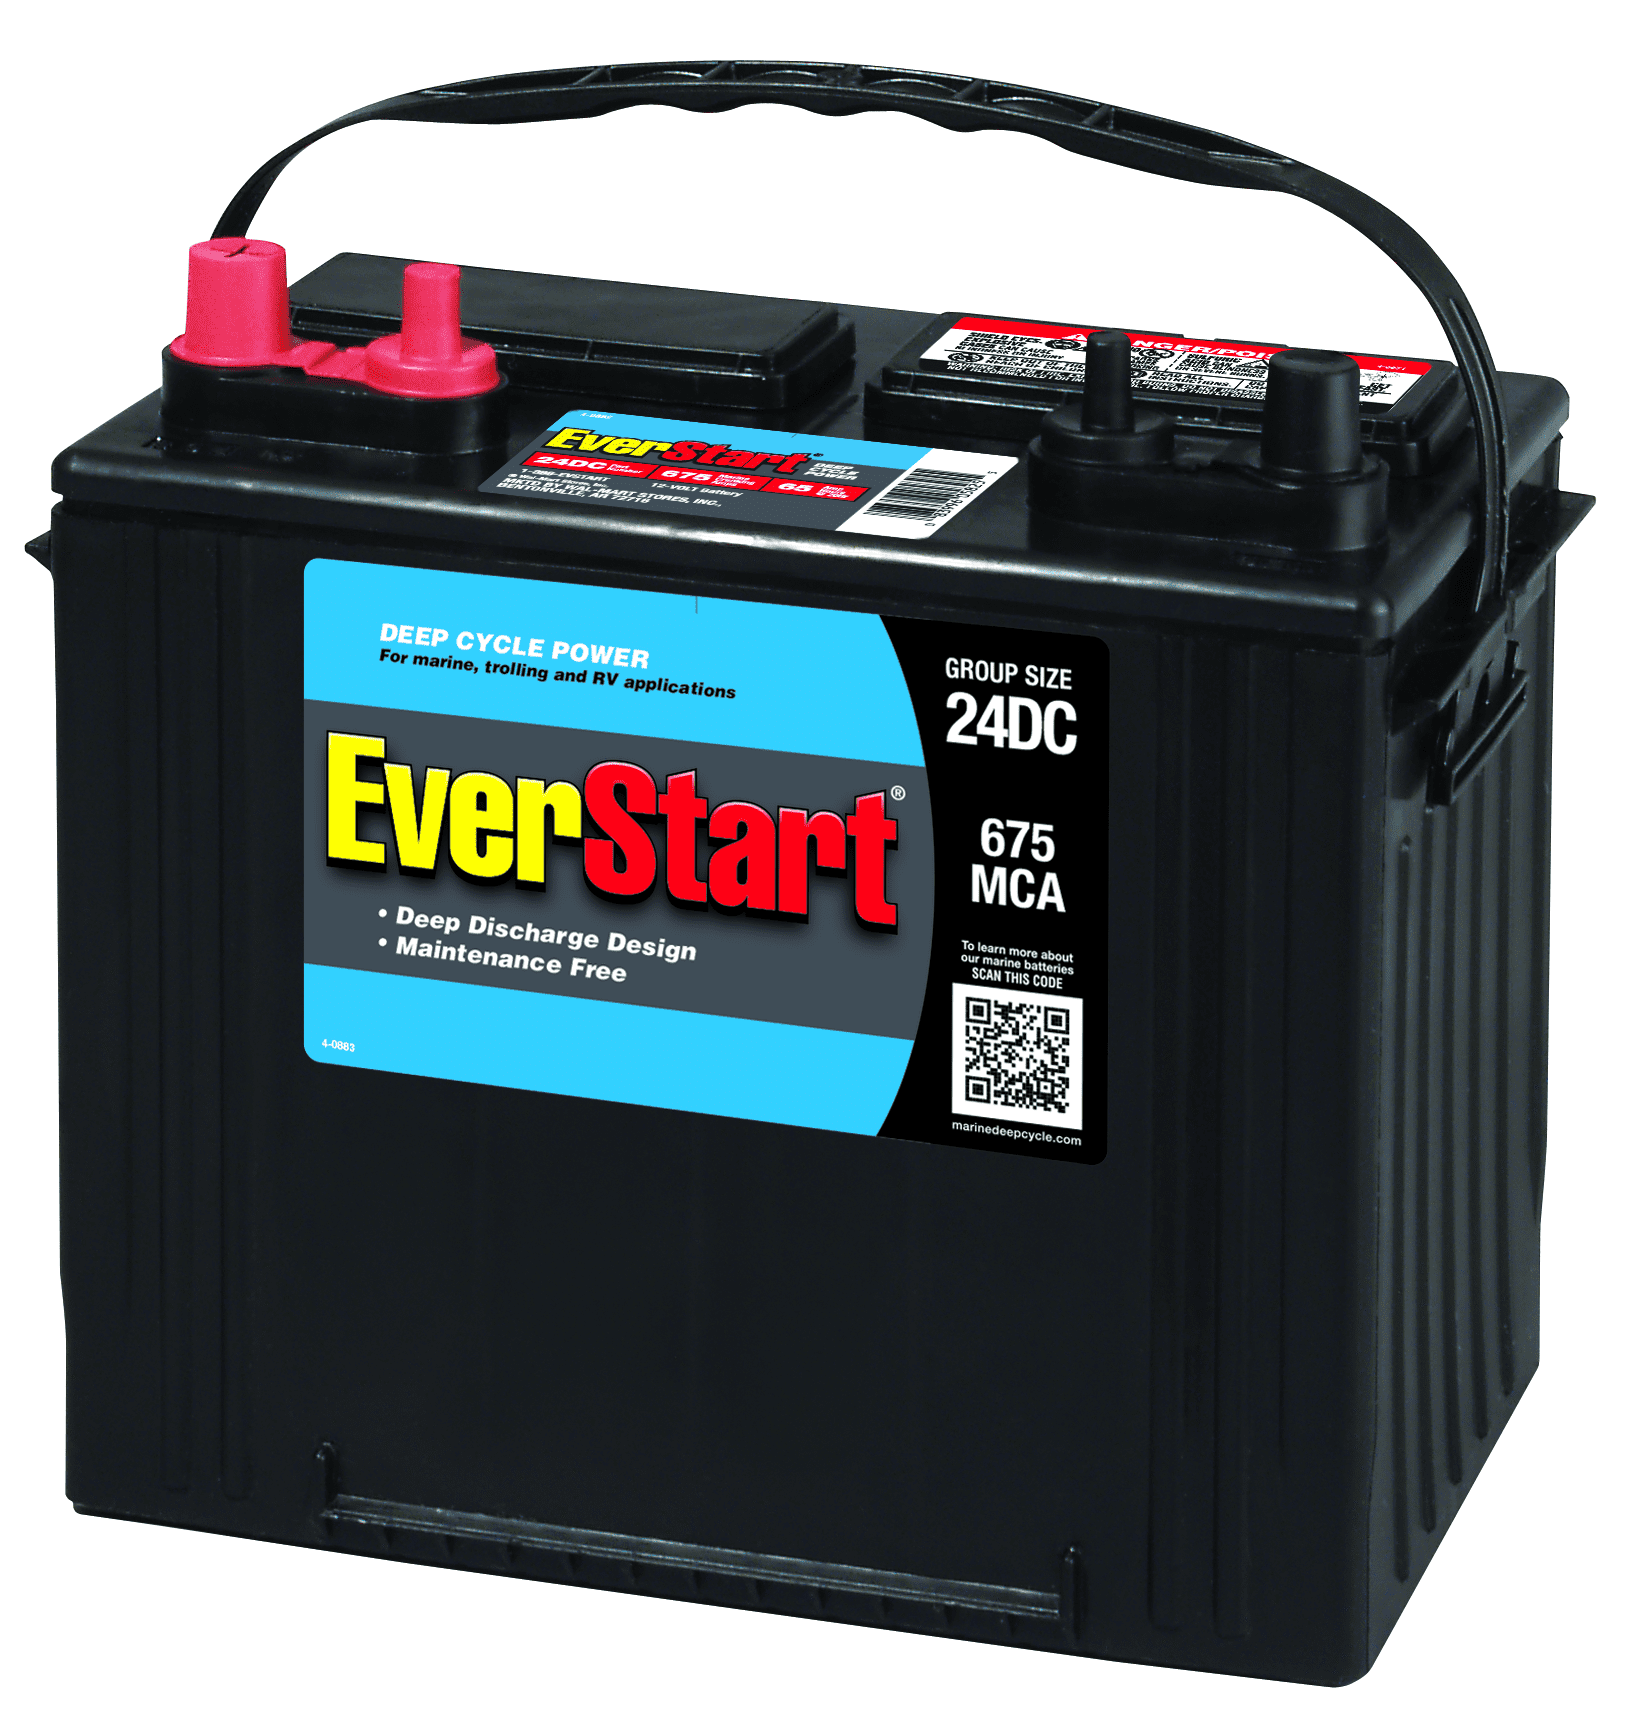 EverStart Lead Acid Marine Battery, Group 24DC - Walmart.com Everstart Lead Acid Marine & Rv Deep Cycle Battery